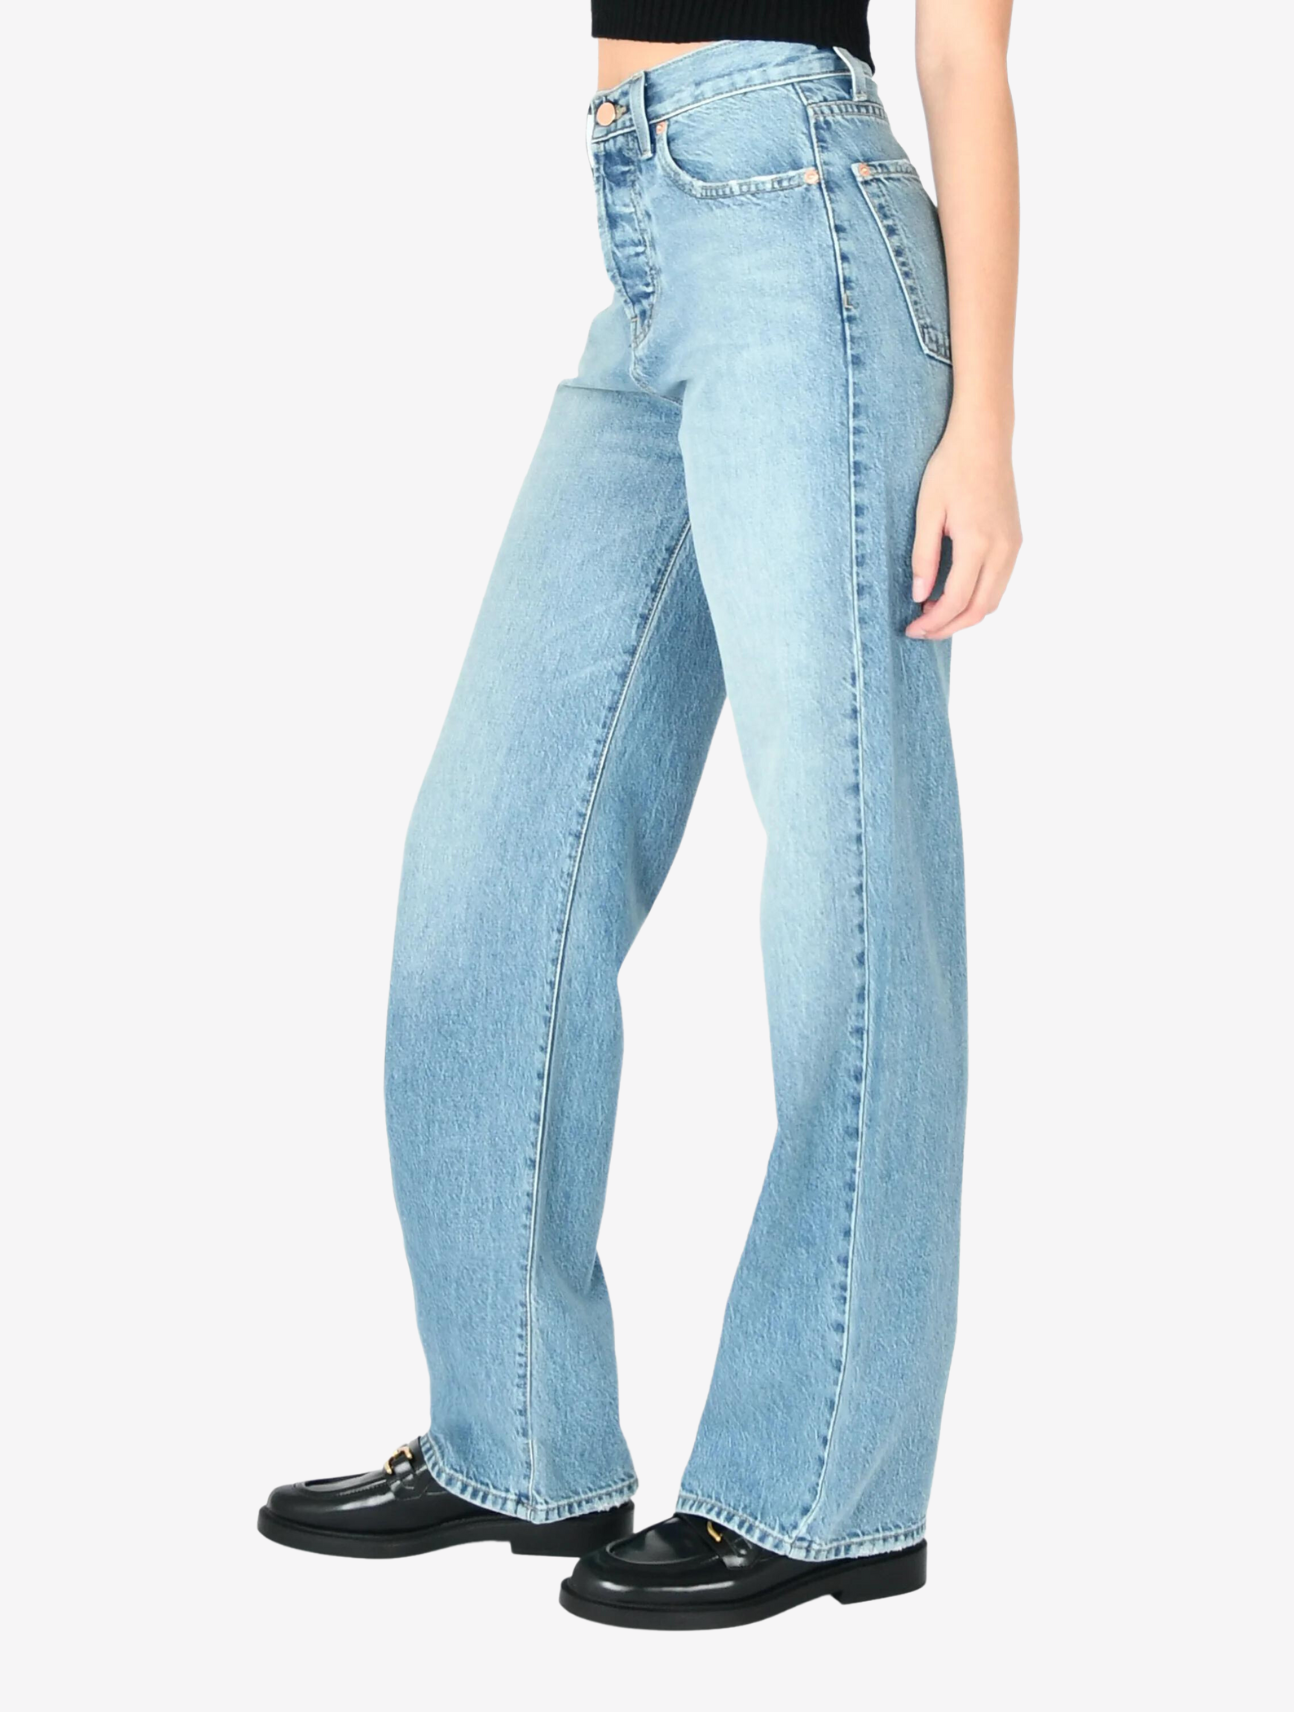 HEVIRGO Women Splicing Jeans Slim Causal Tight High Waist Denim Trousers  for Daily Life,Blue 3XL